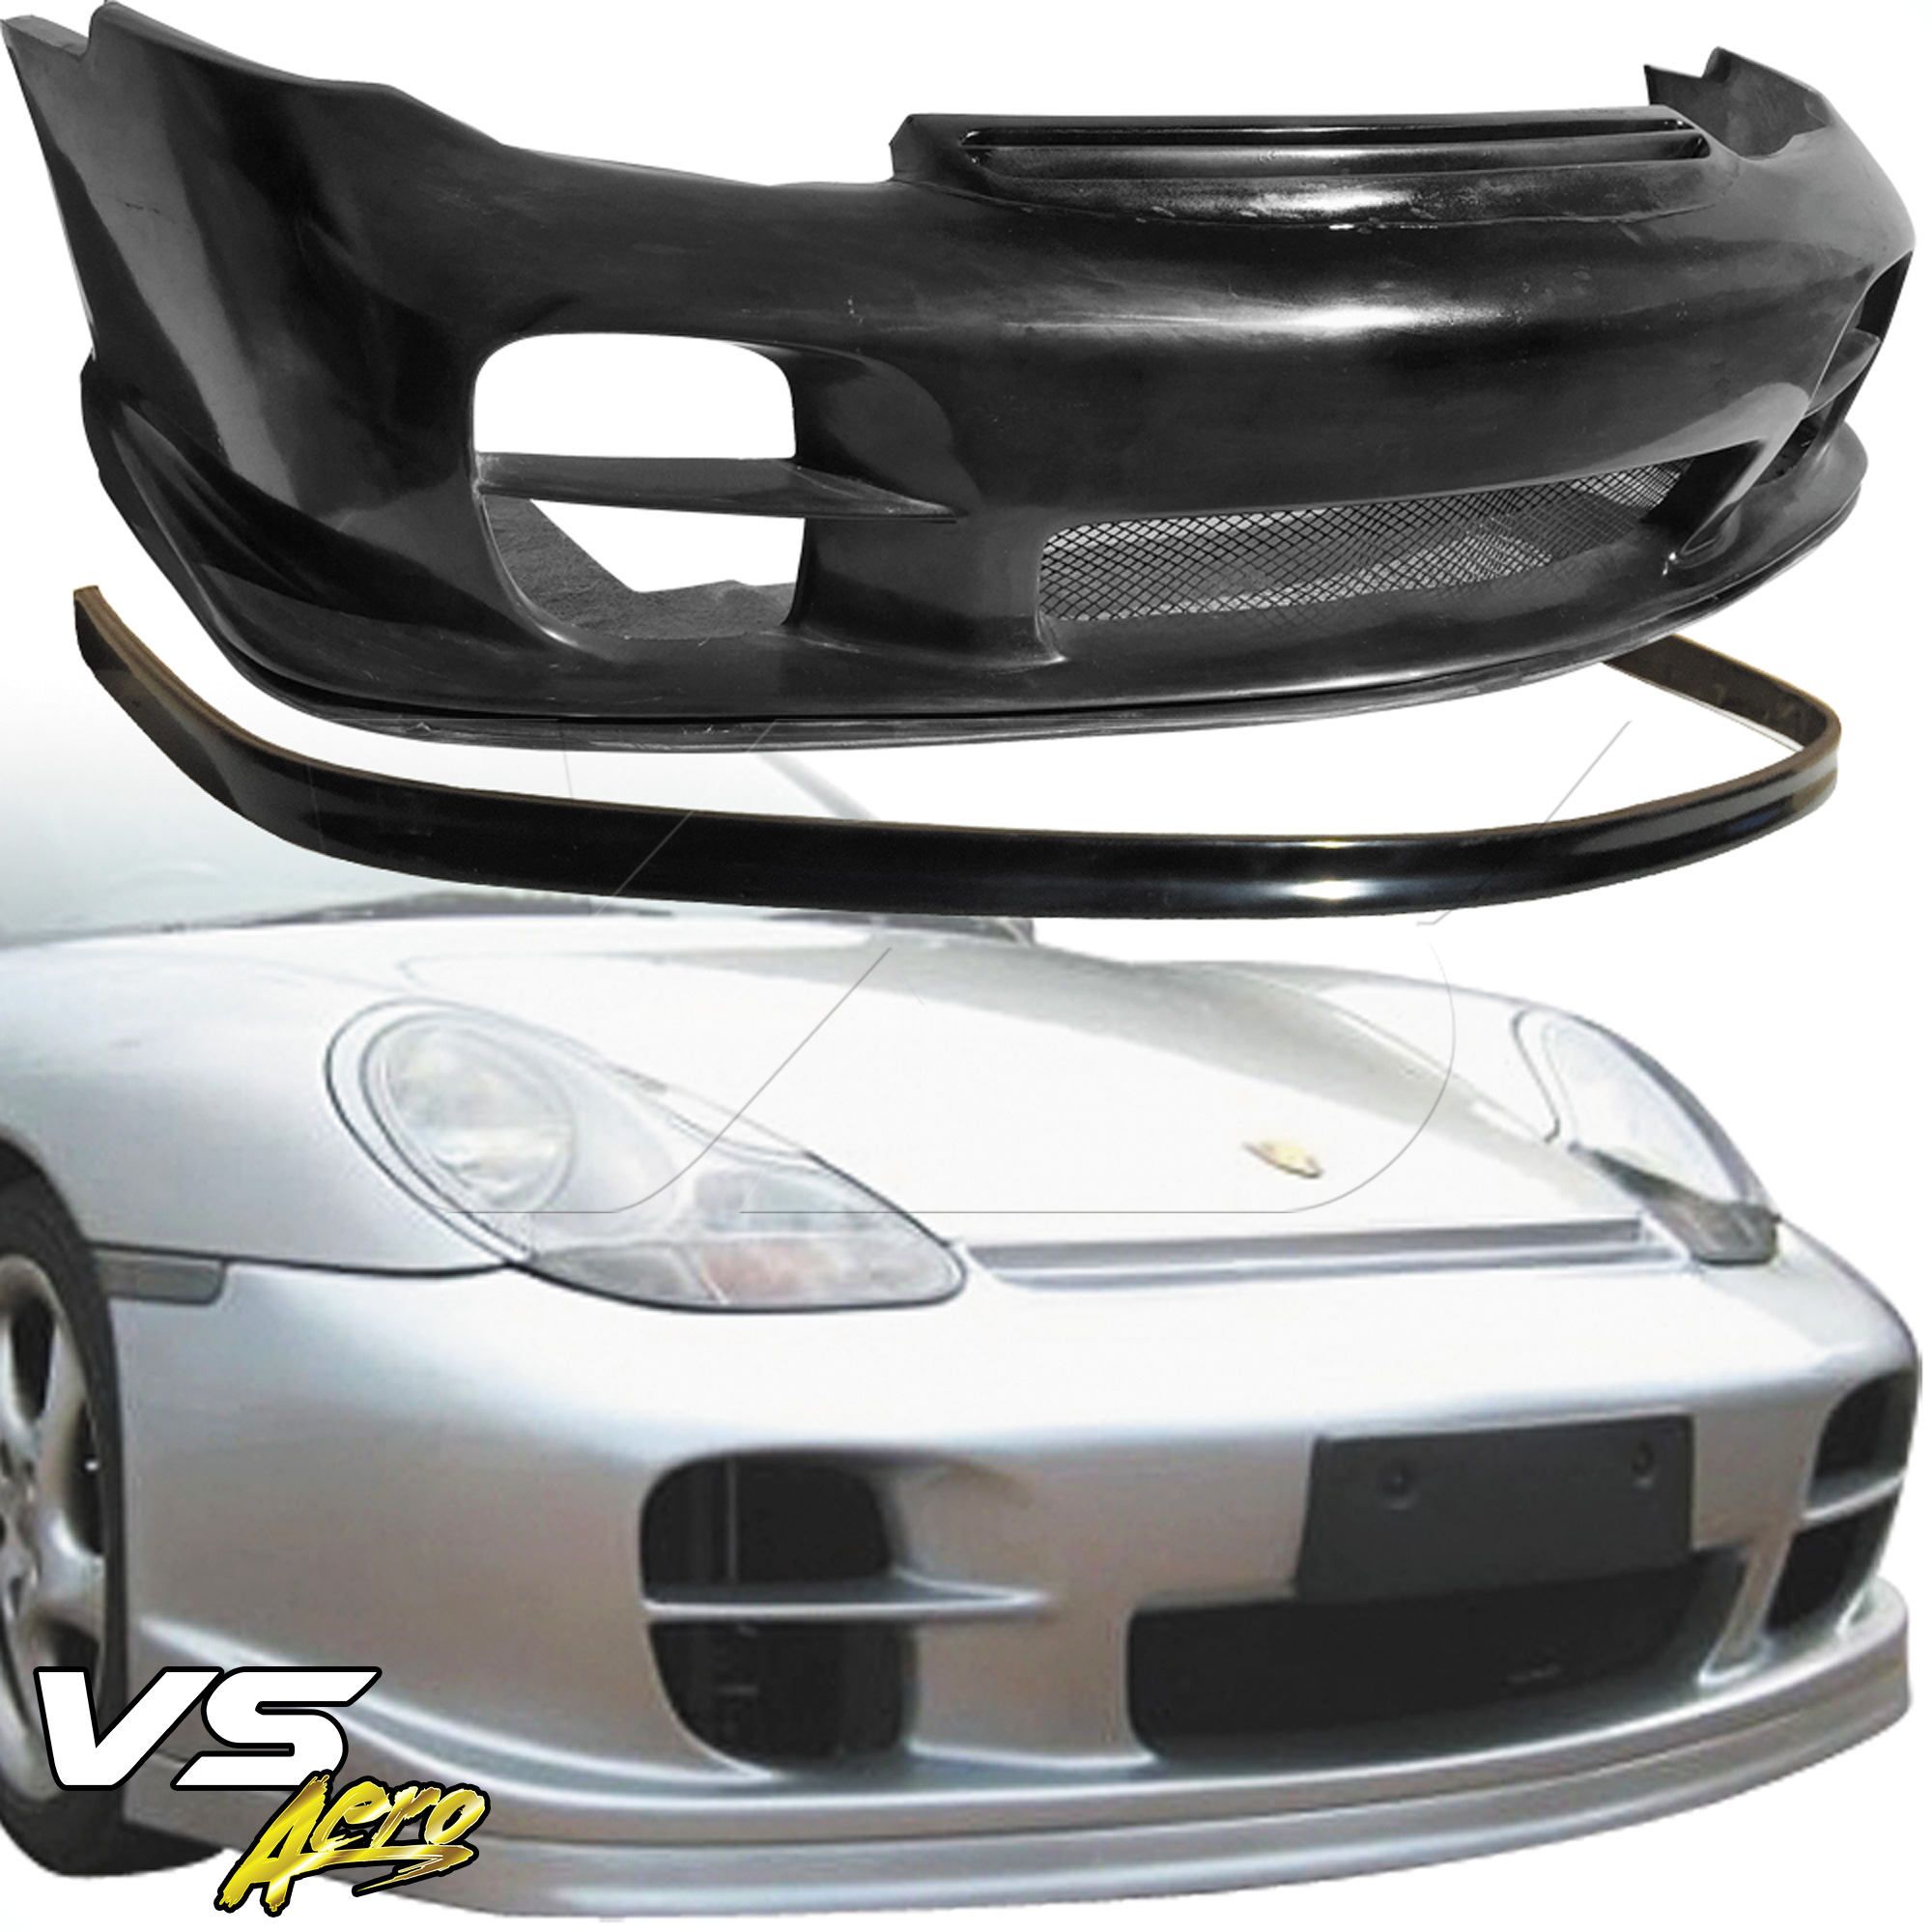 VSaero FRP GT2 Body Kit 3pc > Porsche Boxster 986 1997-2004 - Image 7